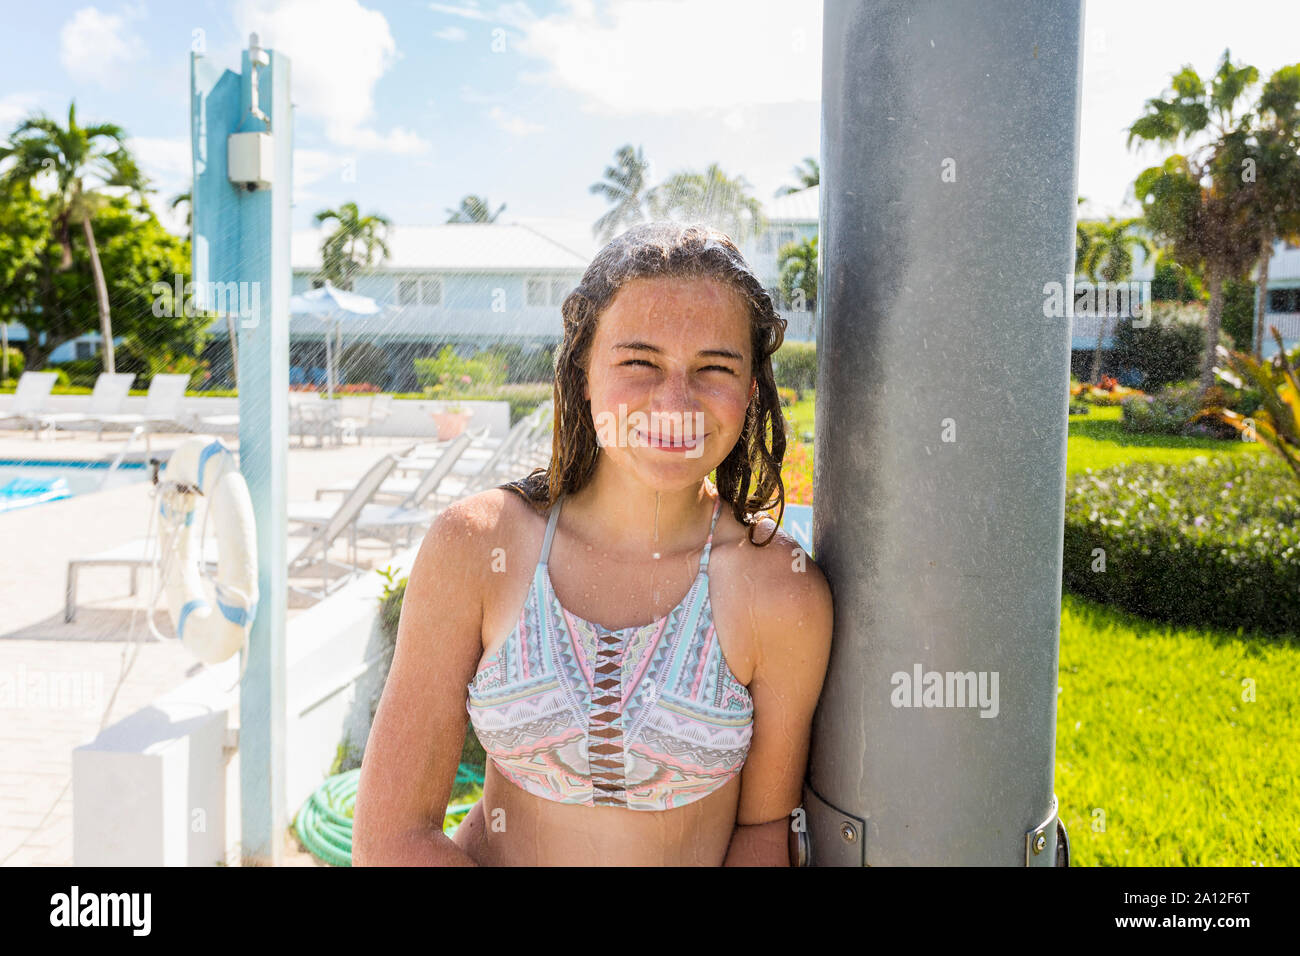 13 year old girl wearing bikini smiling at camera Stock Photo - Alamy